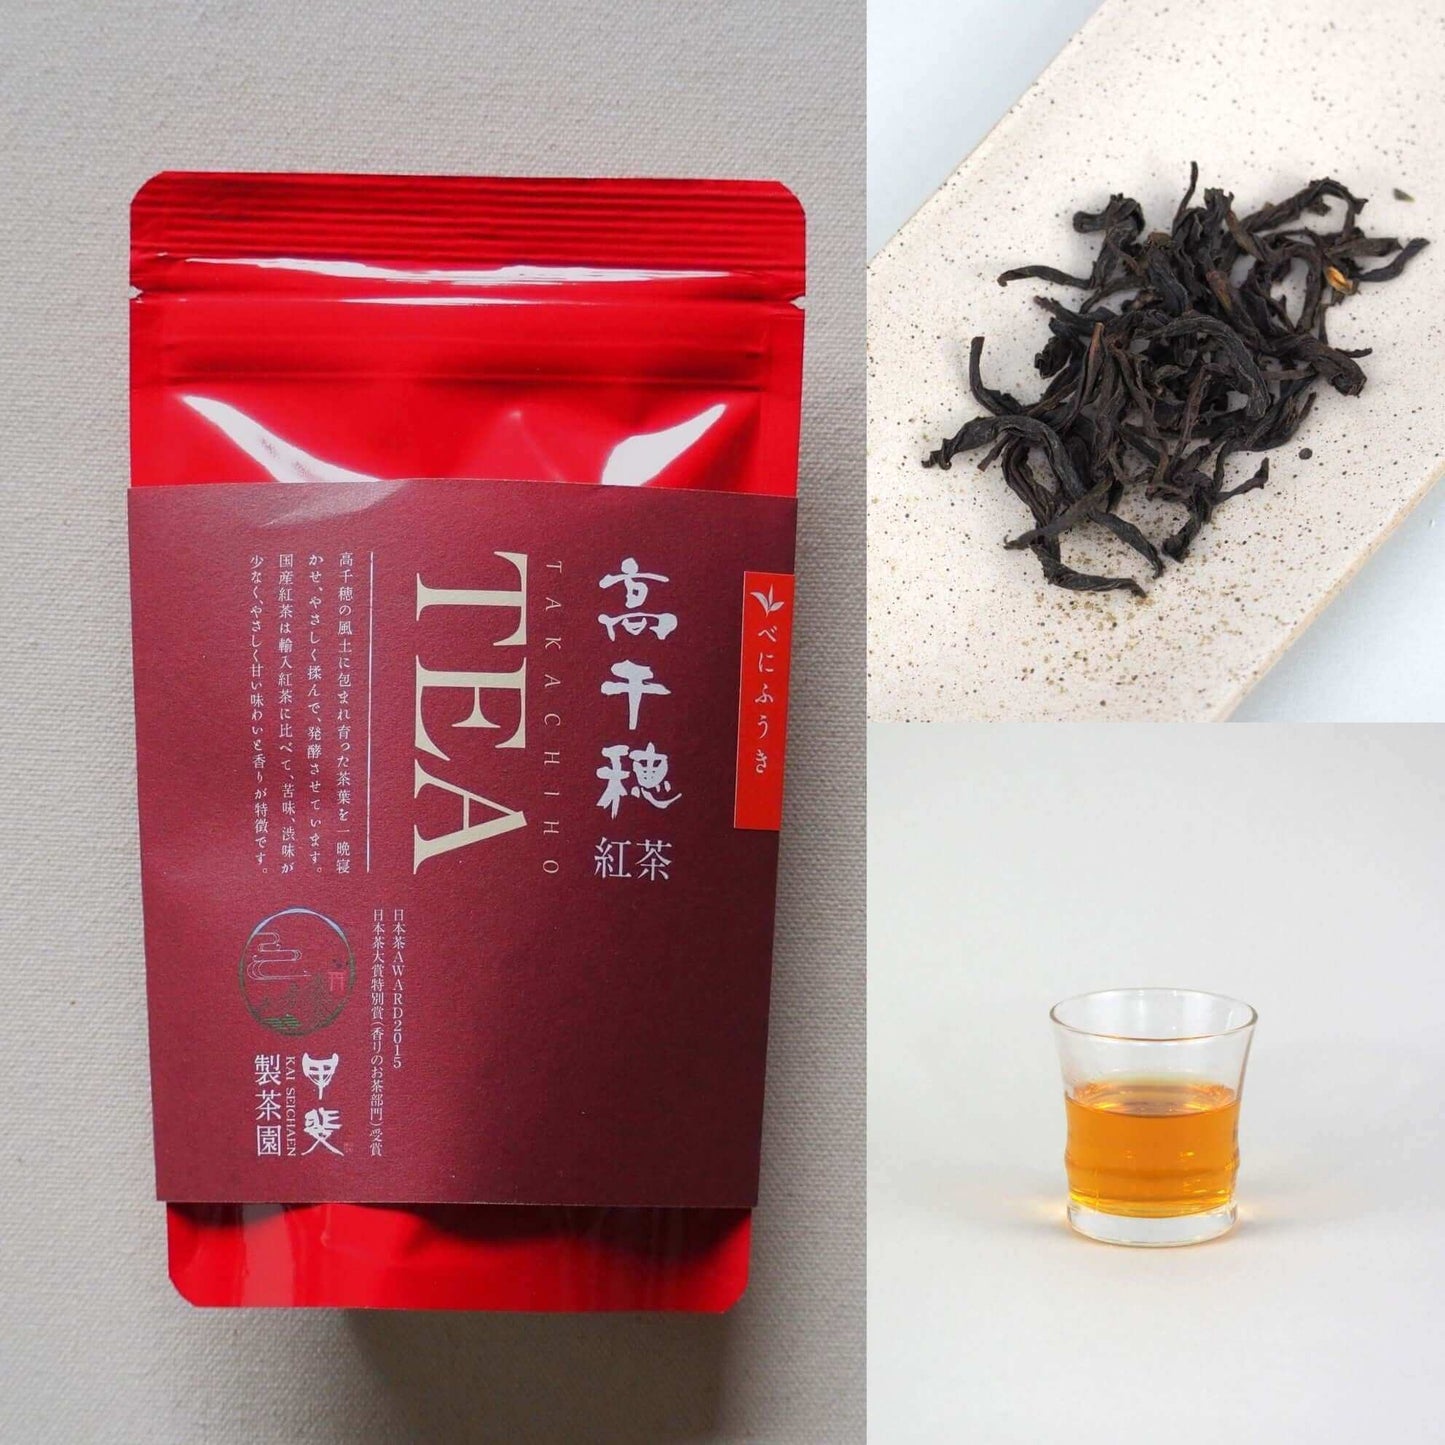 Tea gift "Tea instead of a bouquet" Japanese black tea set